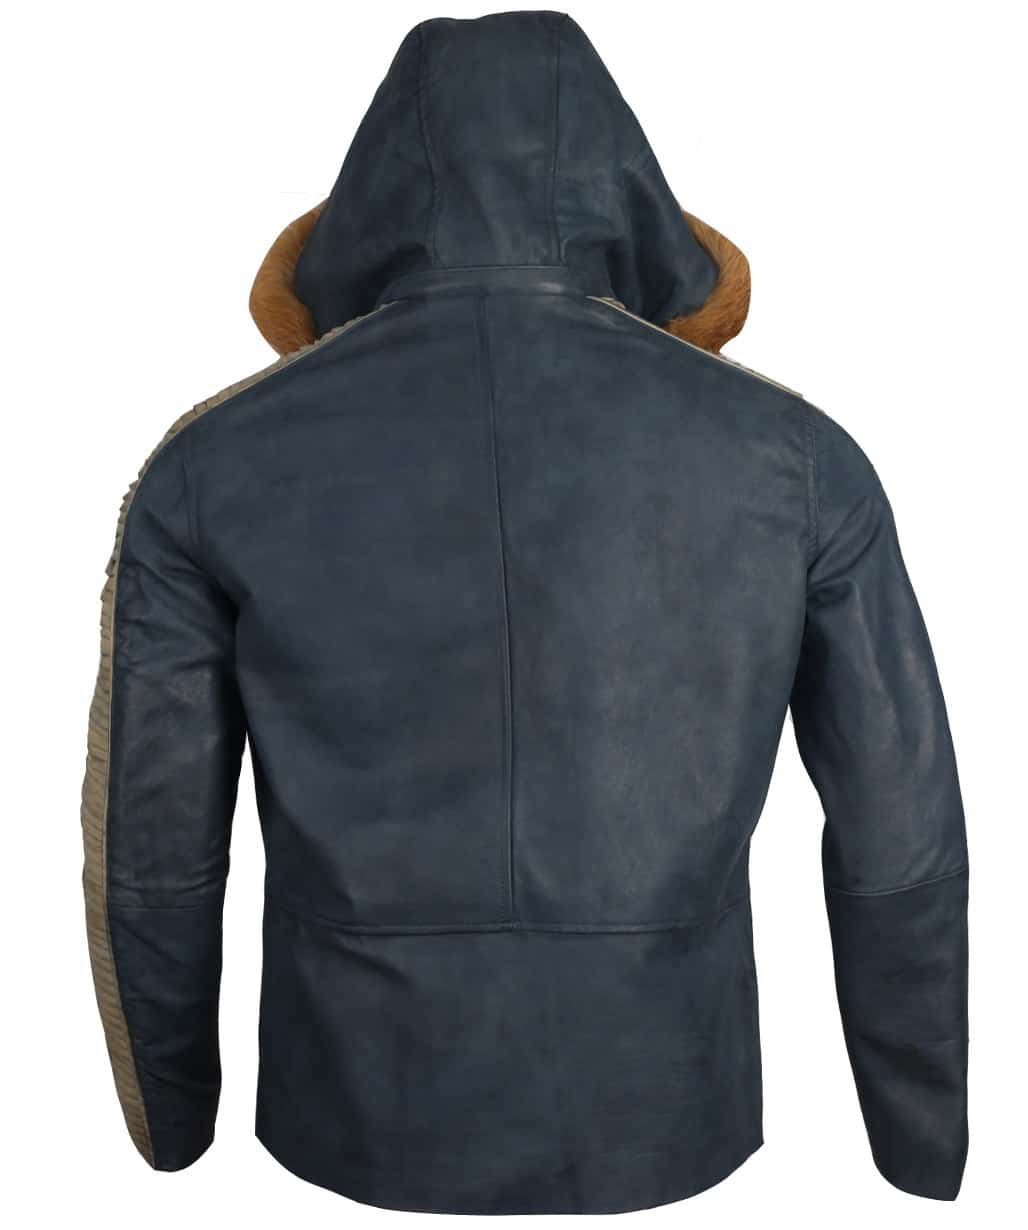 Star Wars Rogue One Diego Luna Blue Leather Jacket